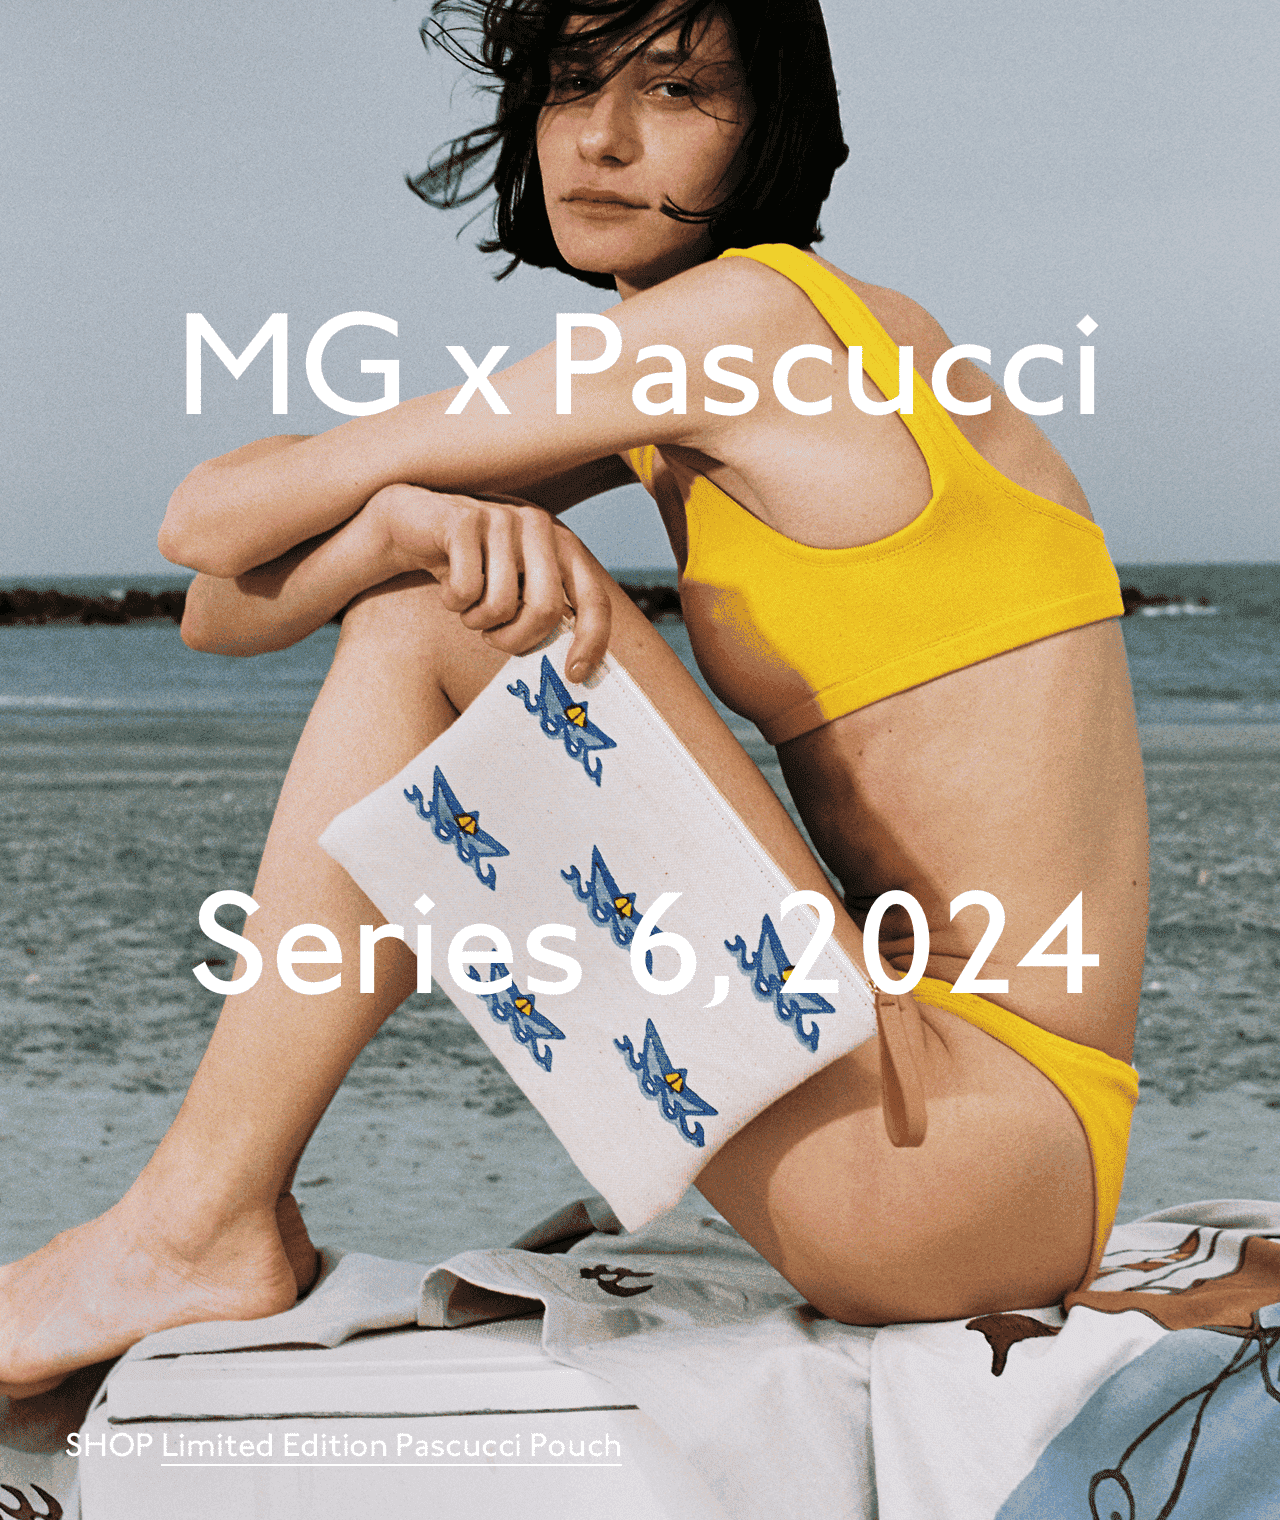 Introducing MG x Pascucci Series 6, 2024